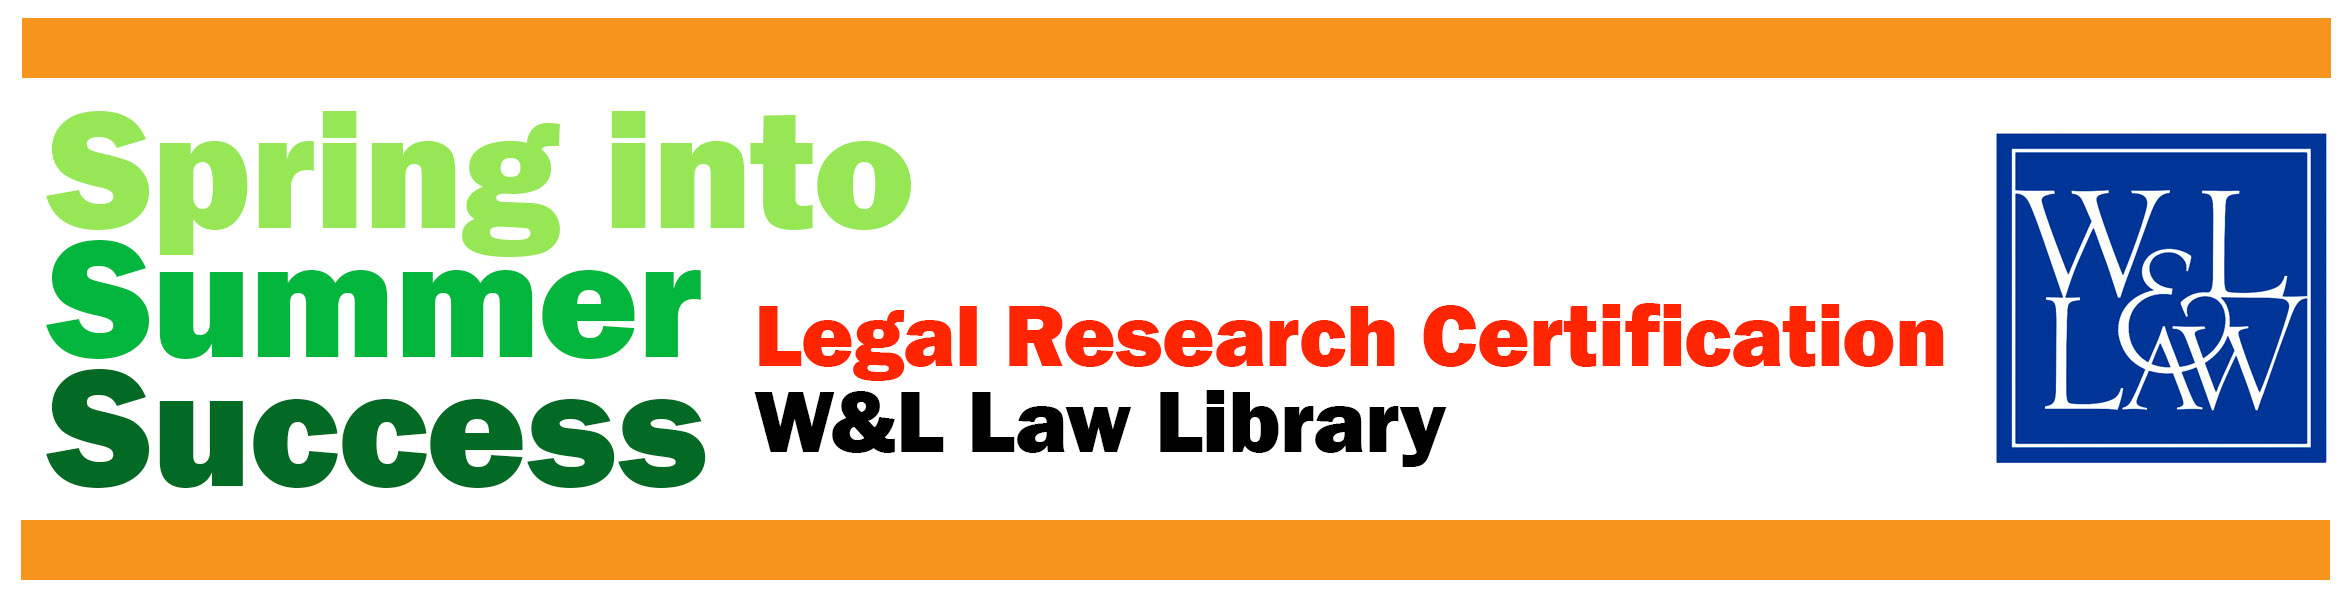 legal research certificate programs